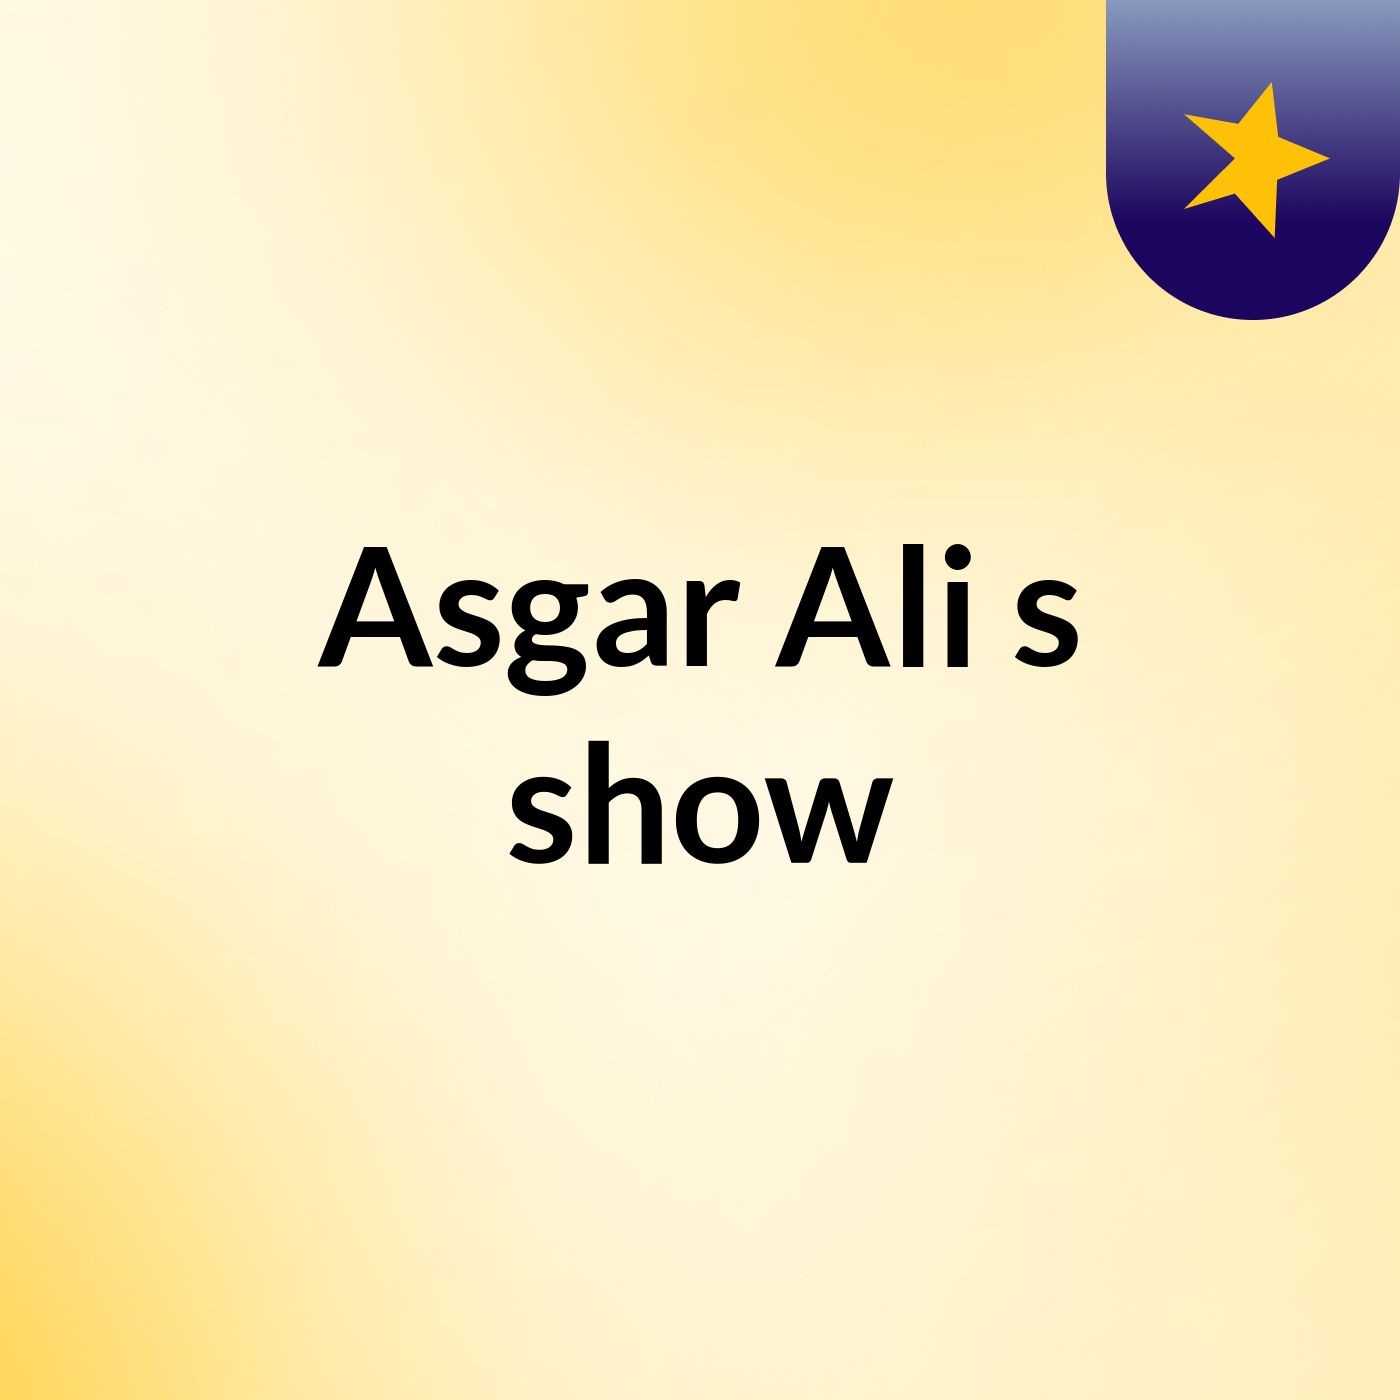 Asgar Ali's show